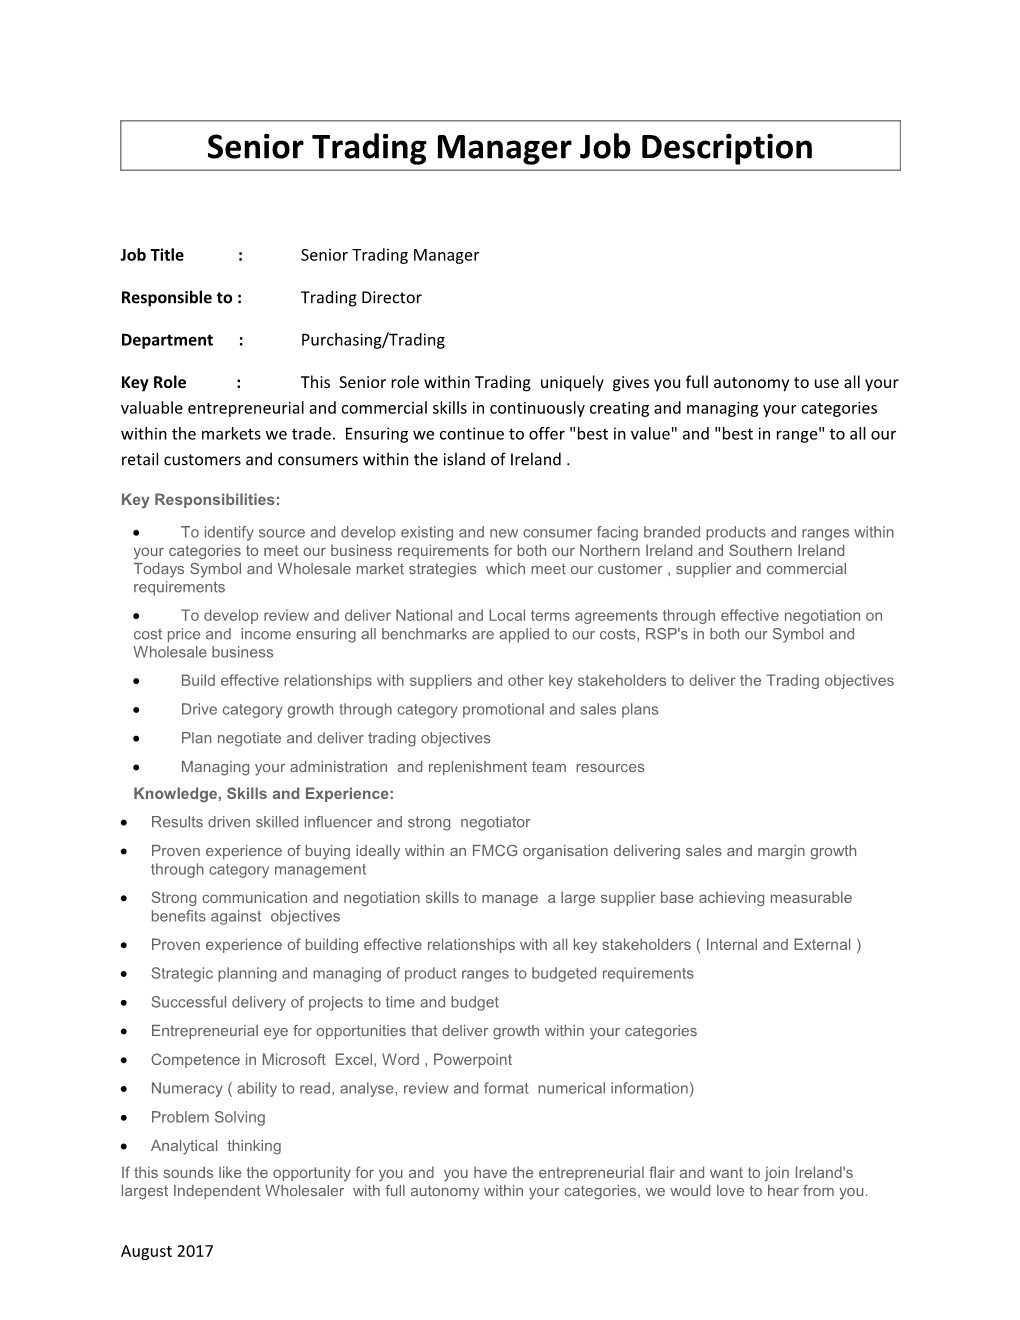 Senior Trading Manager Job Description